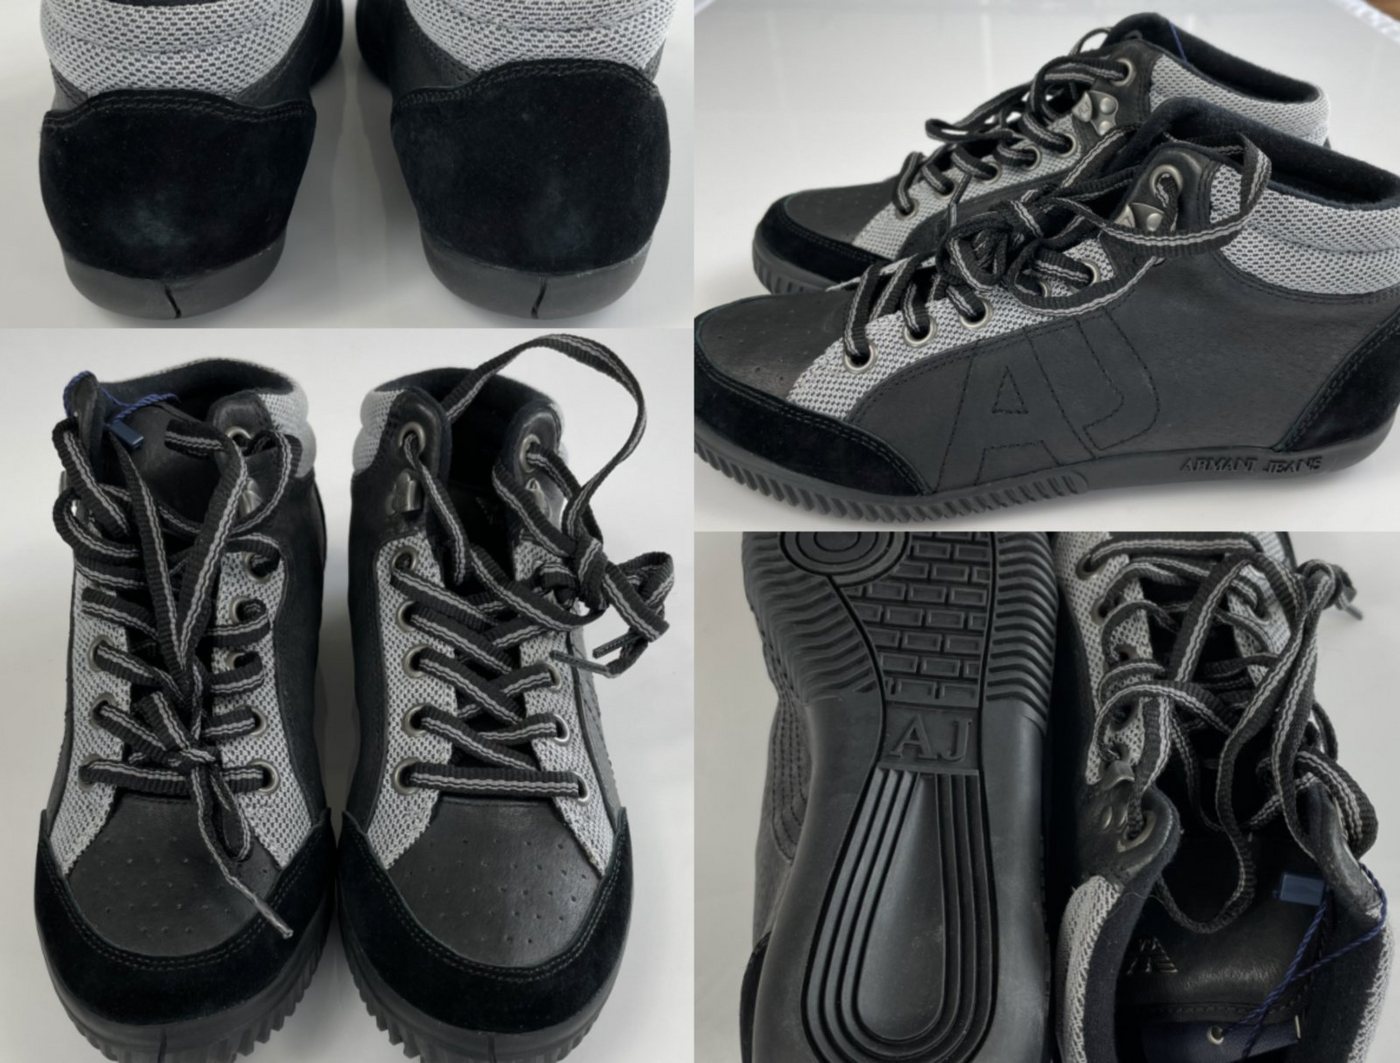 ARMANI JEANS Armani Jeans Mid Top Logo Tech Sneakers Trainers Turnschuhe Schuhe Sho Sneaker von ARMANI JEANS